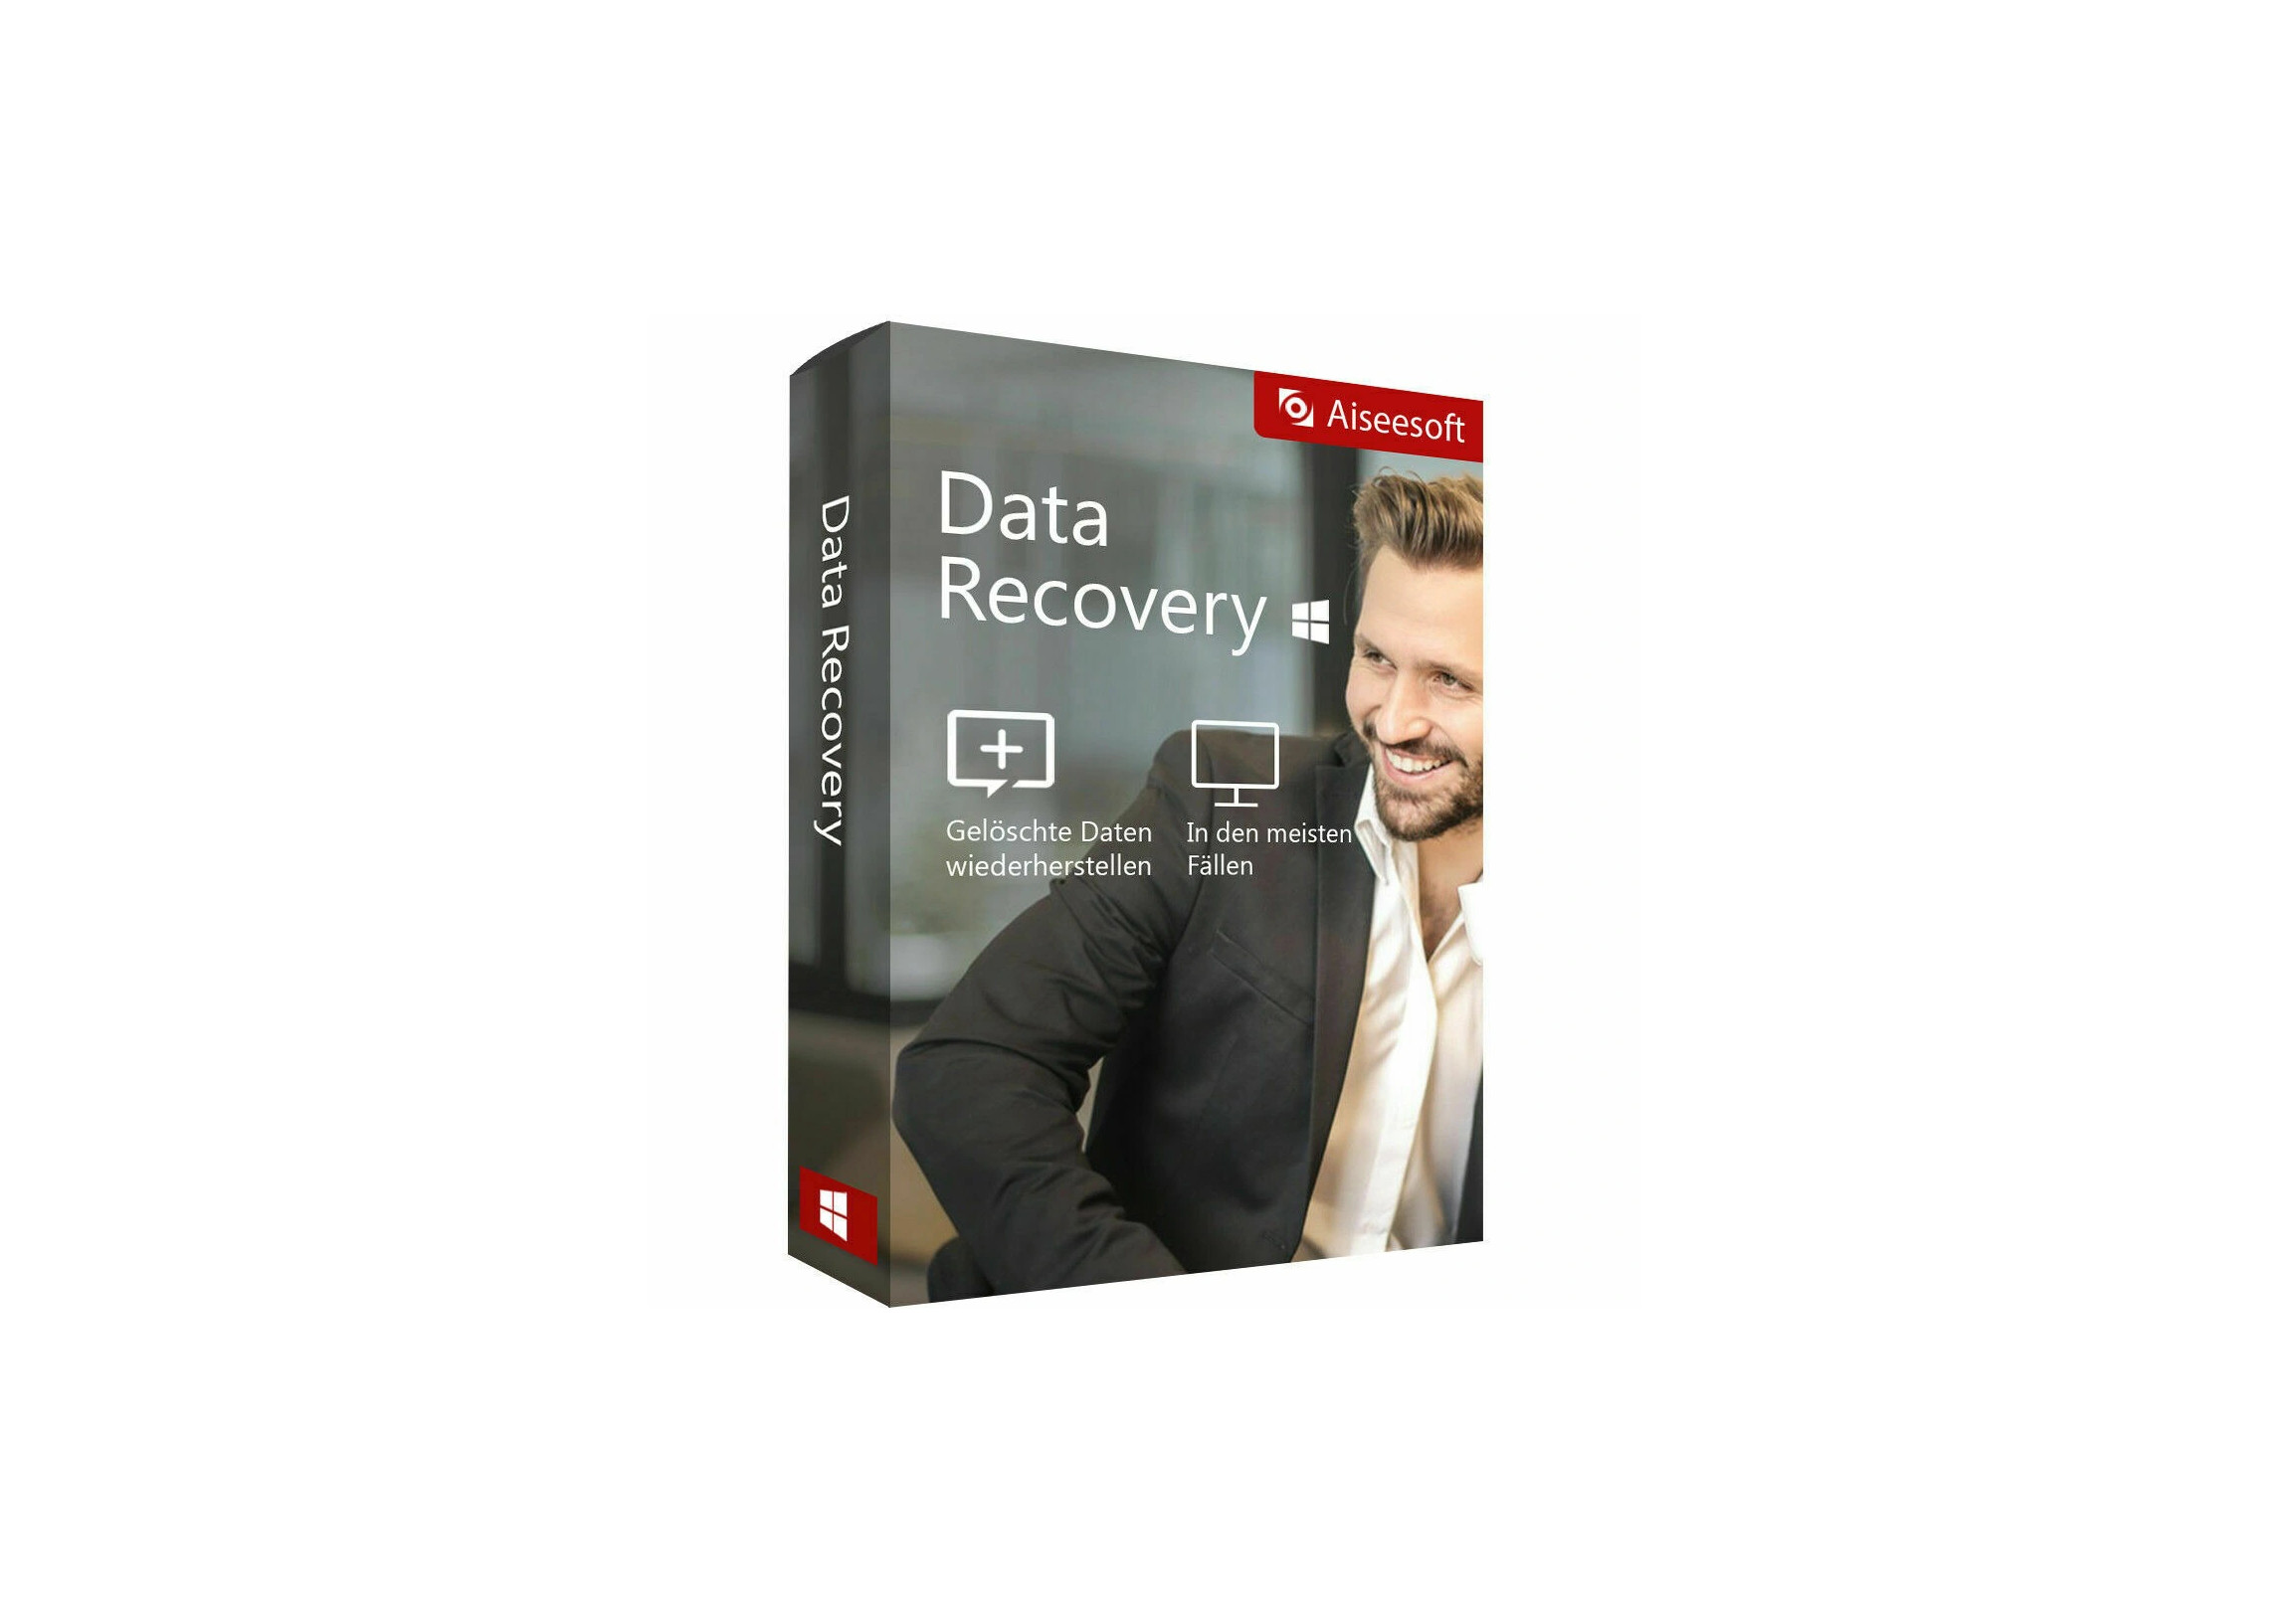 Aiseesoft Data Recovery Key (1 Year / 1 PC) [$ 2.25]